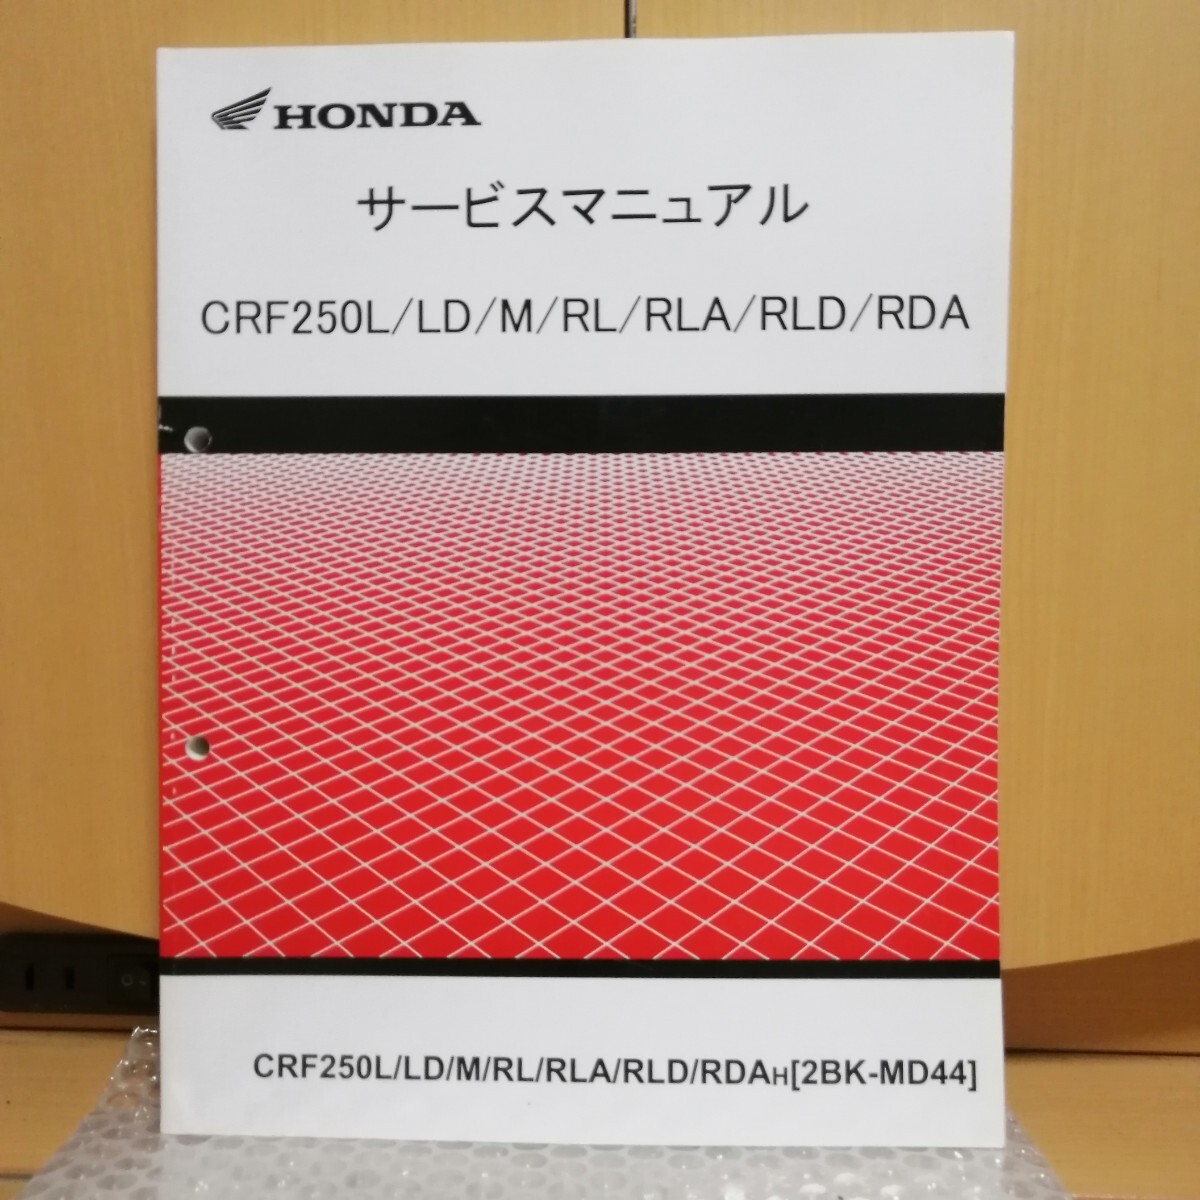  Honda CRF250L/LD/CRF250M/RL/RLA/RLD/RDA/ Rally MD44 service manual service book repair book maintenance restore 